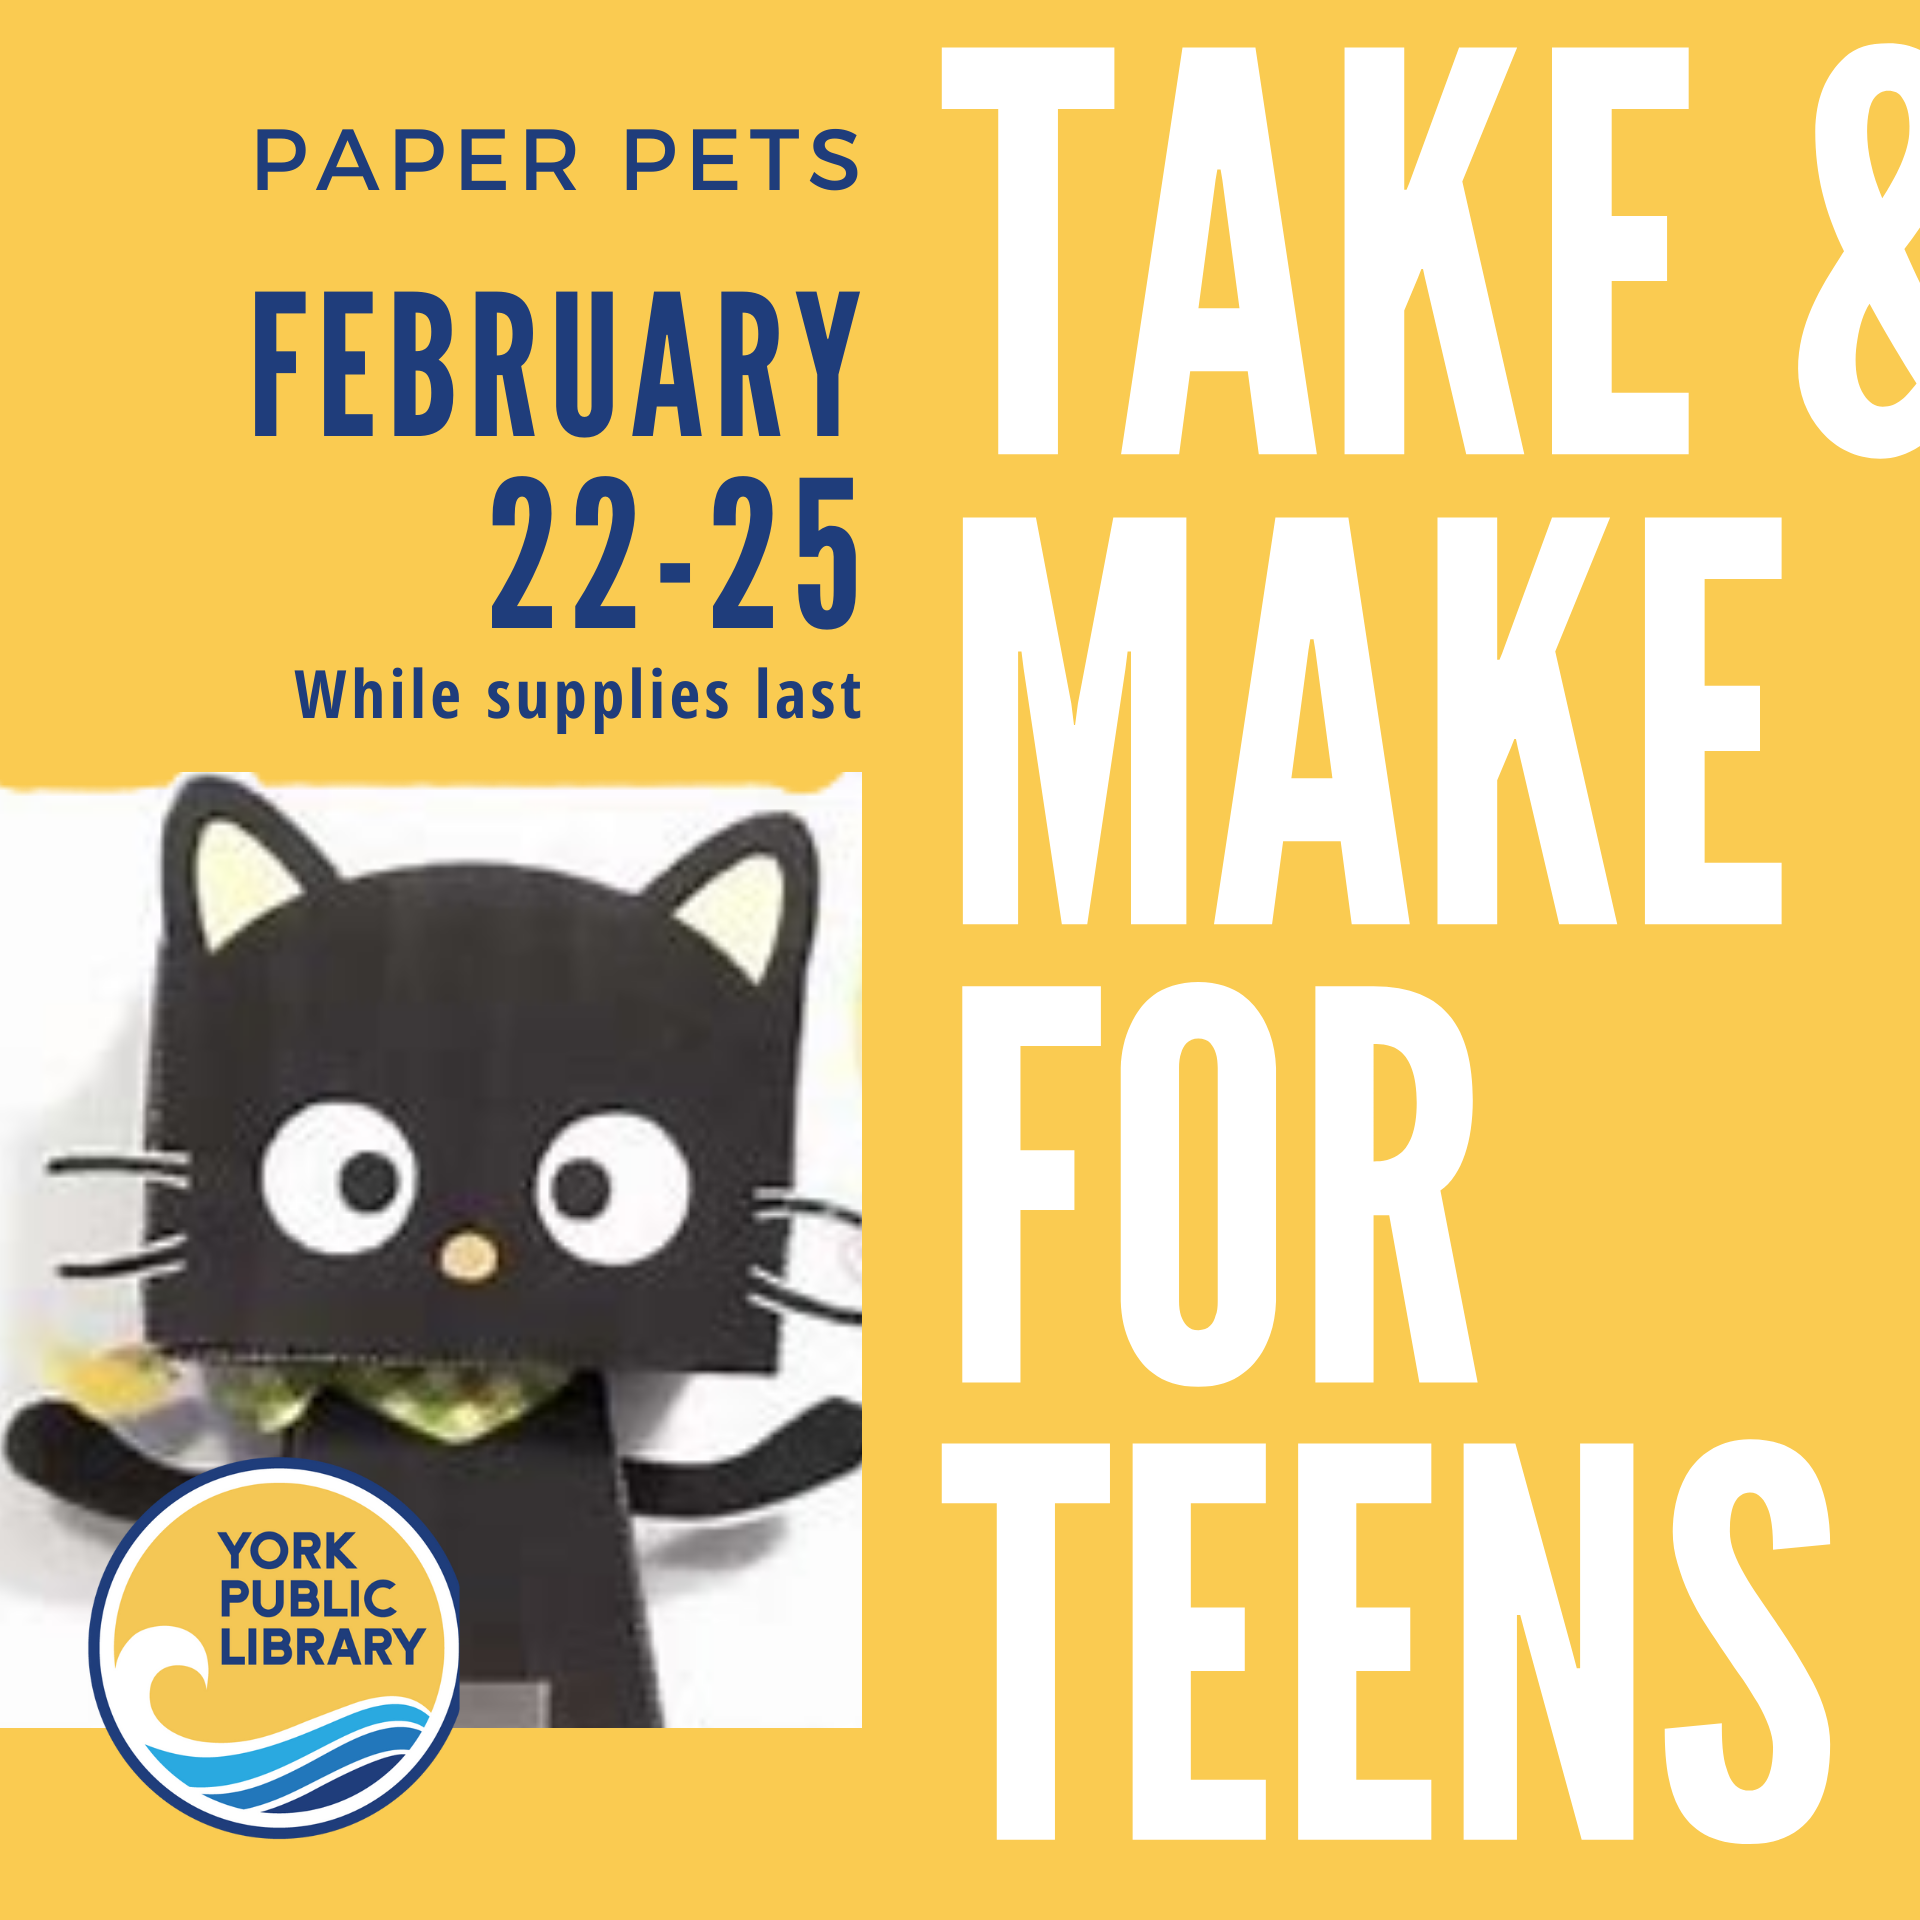 Paper pets craft